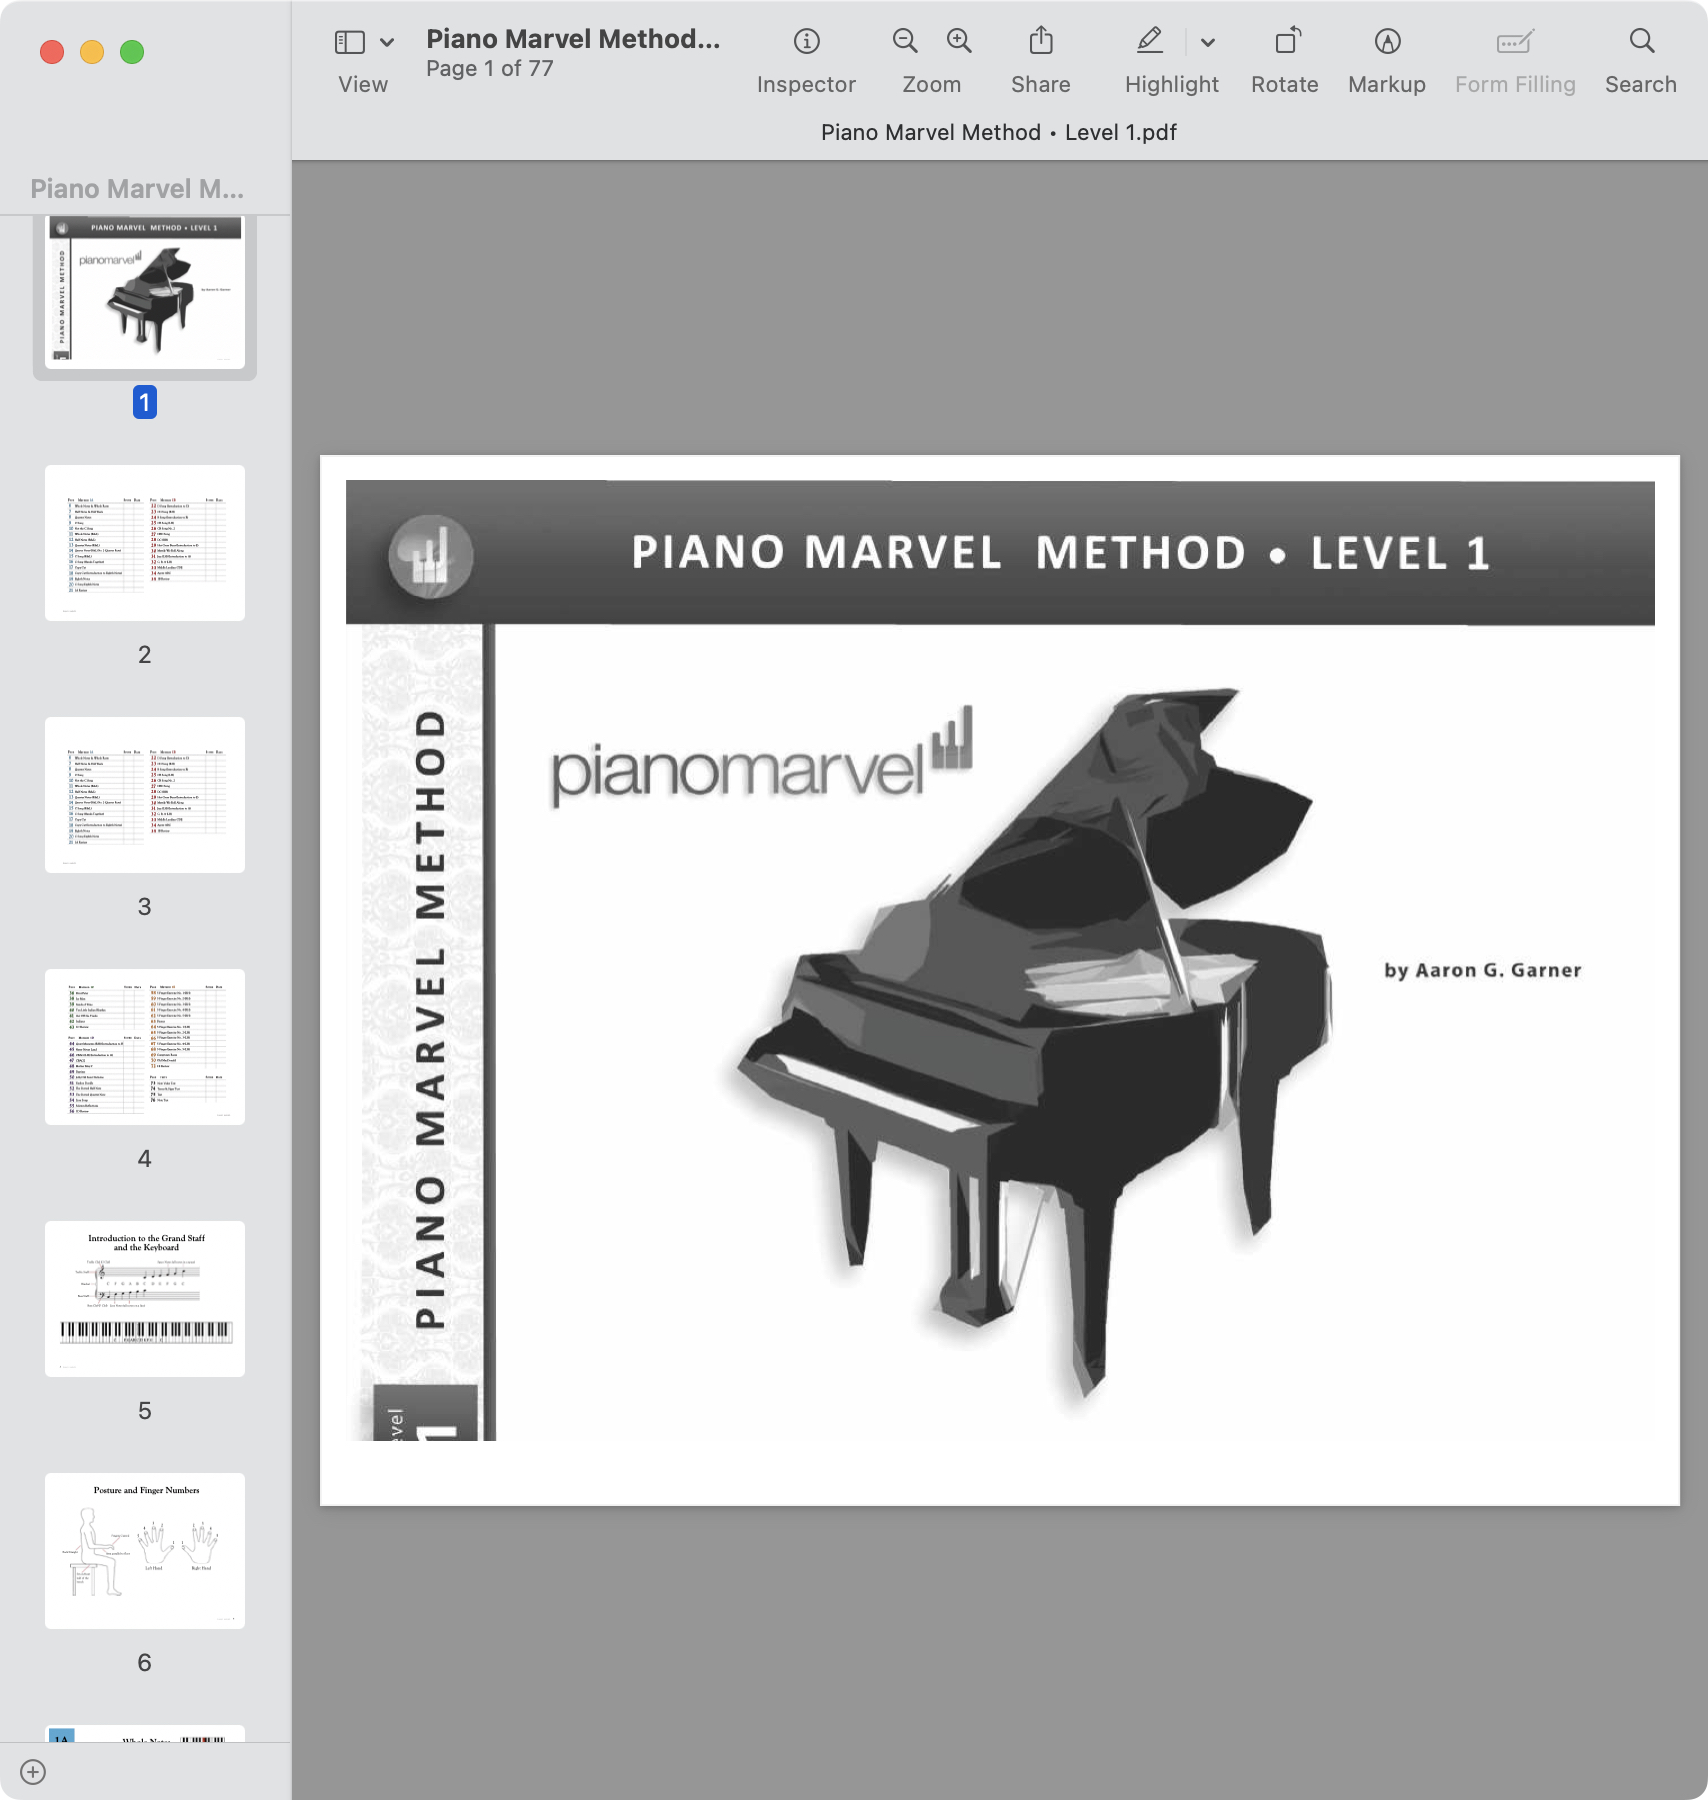 Piano Marvel Method • Level 1.jpg